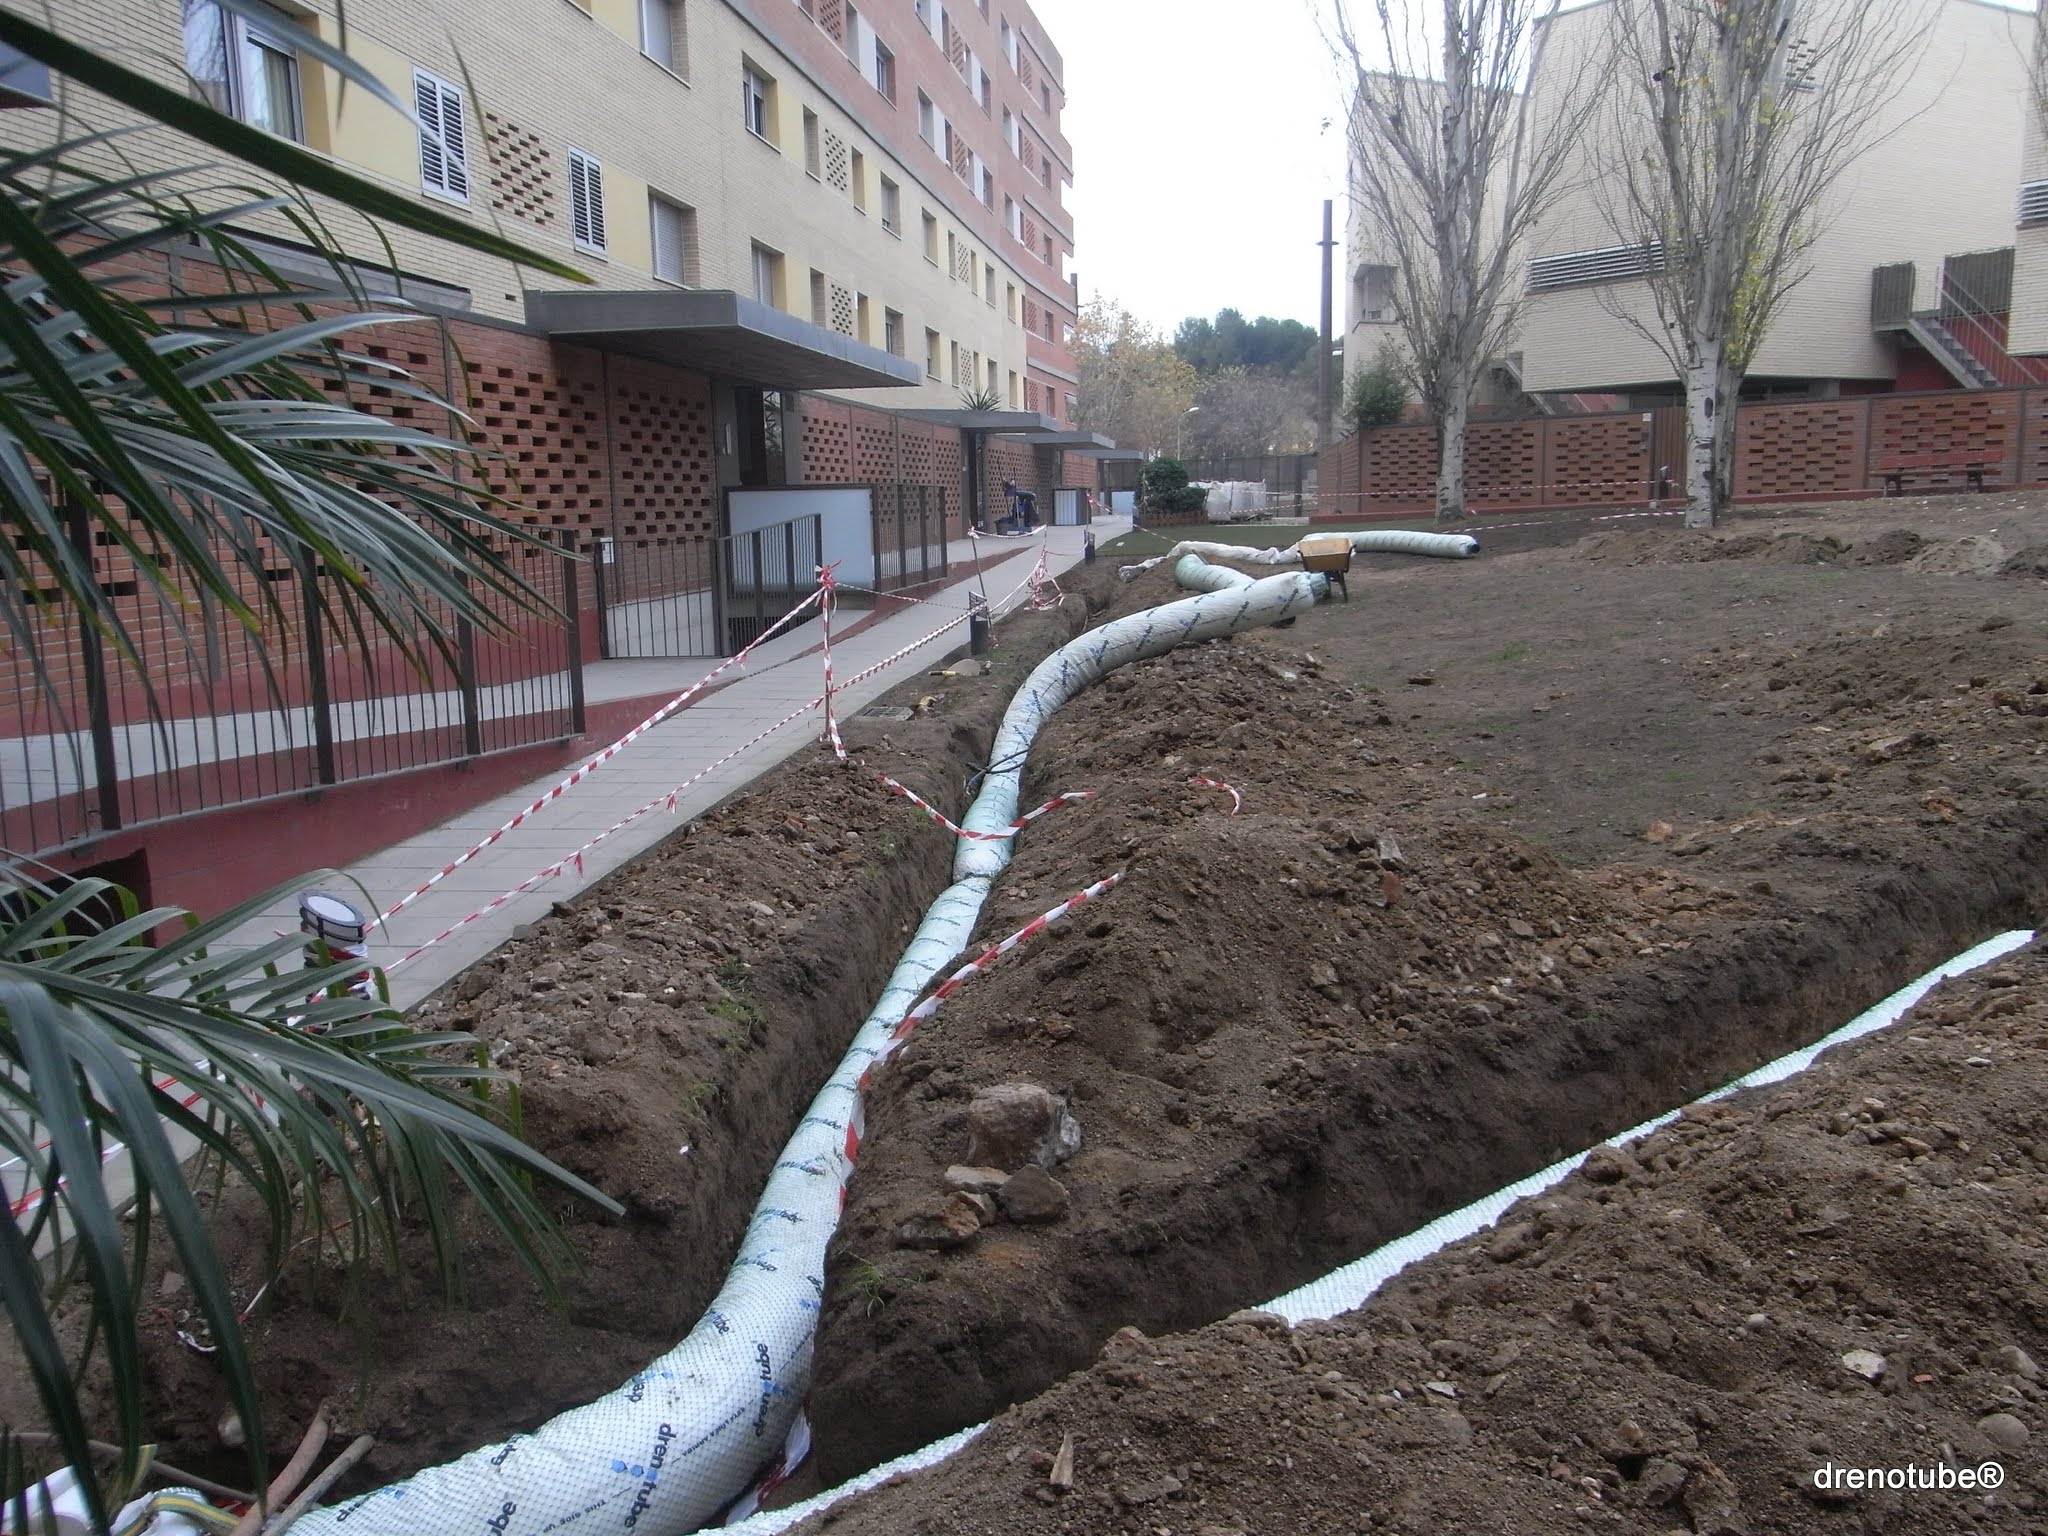 drainage system drenotube® in gardened area – Barcelona